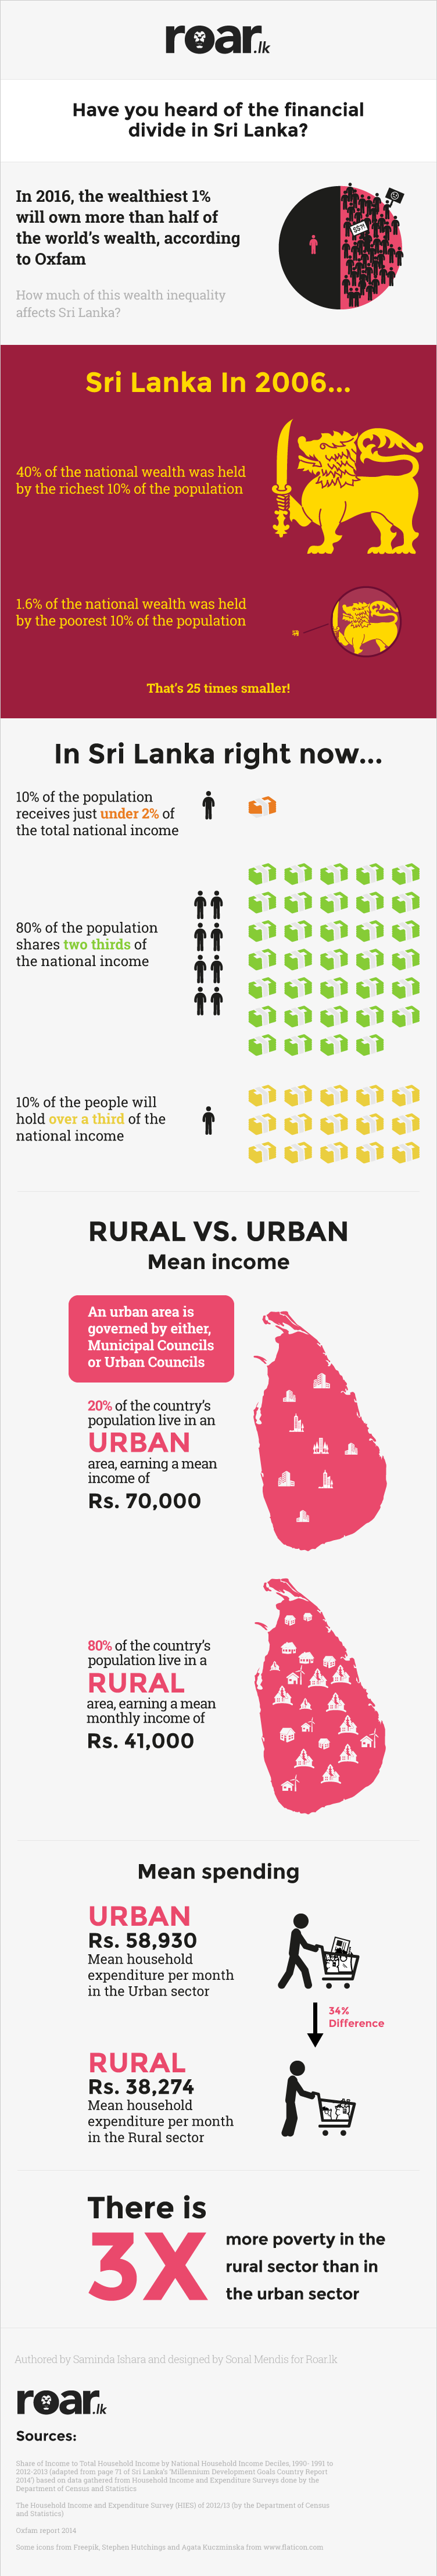 Roar.lk - Financial Divide Infographic